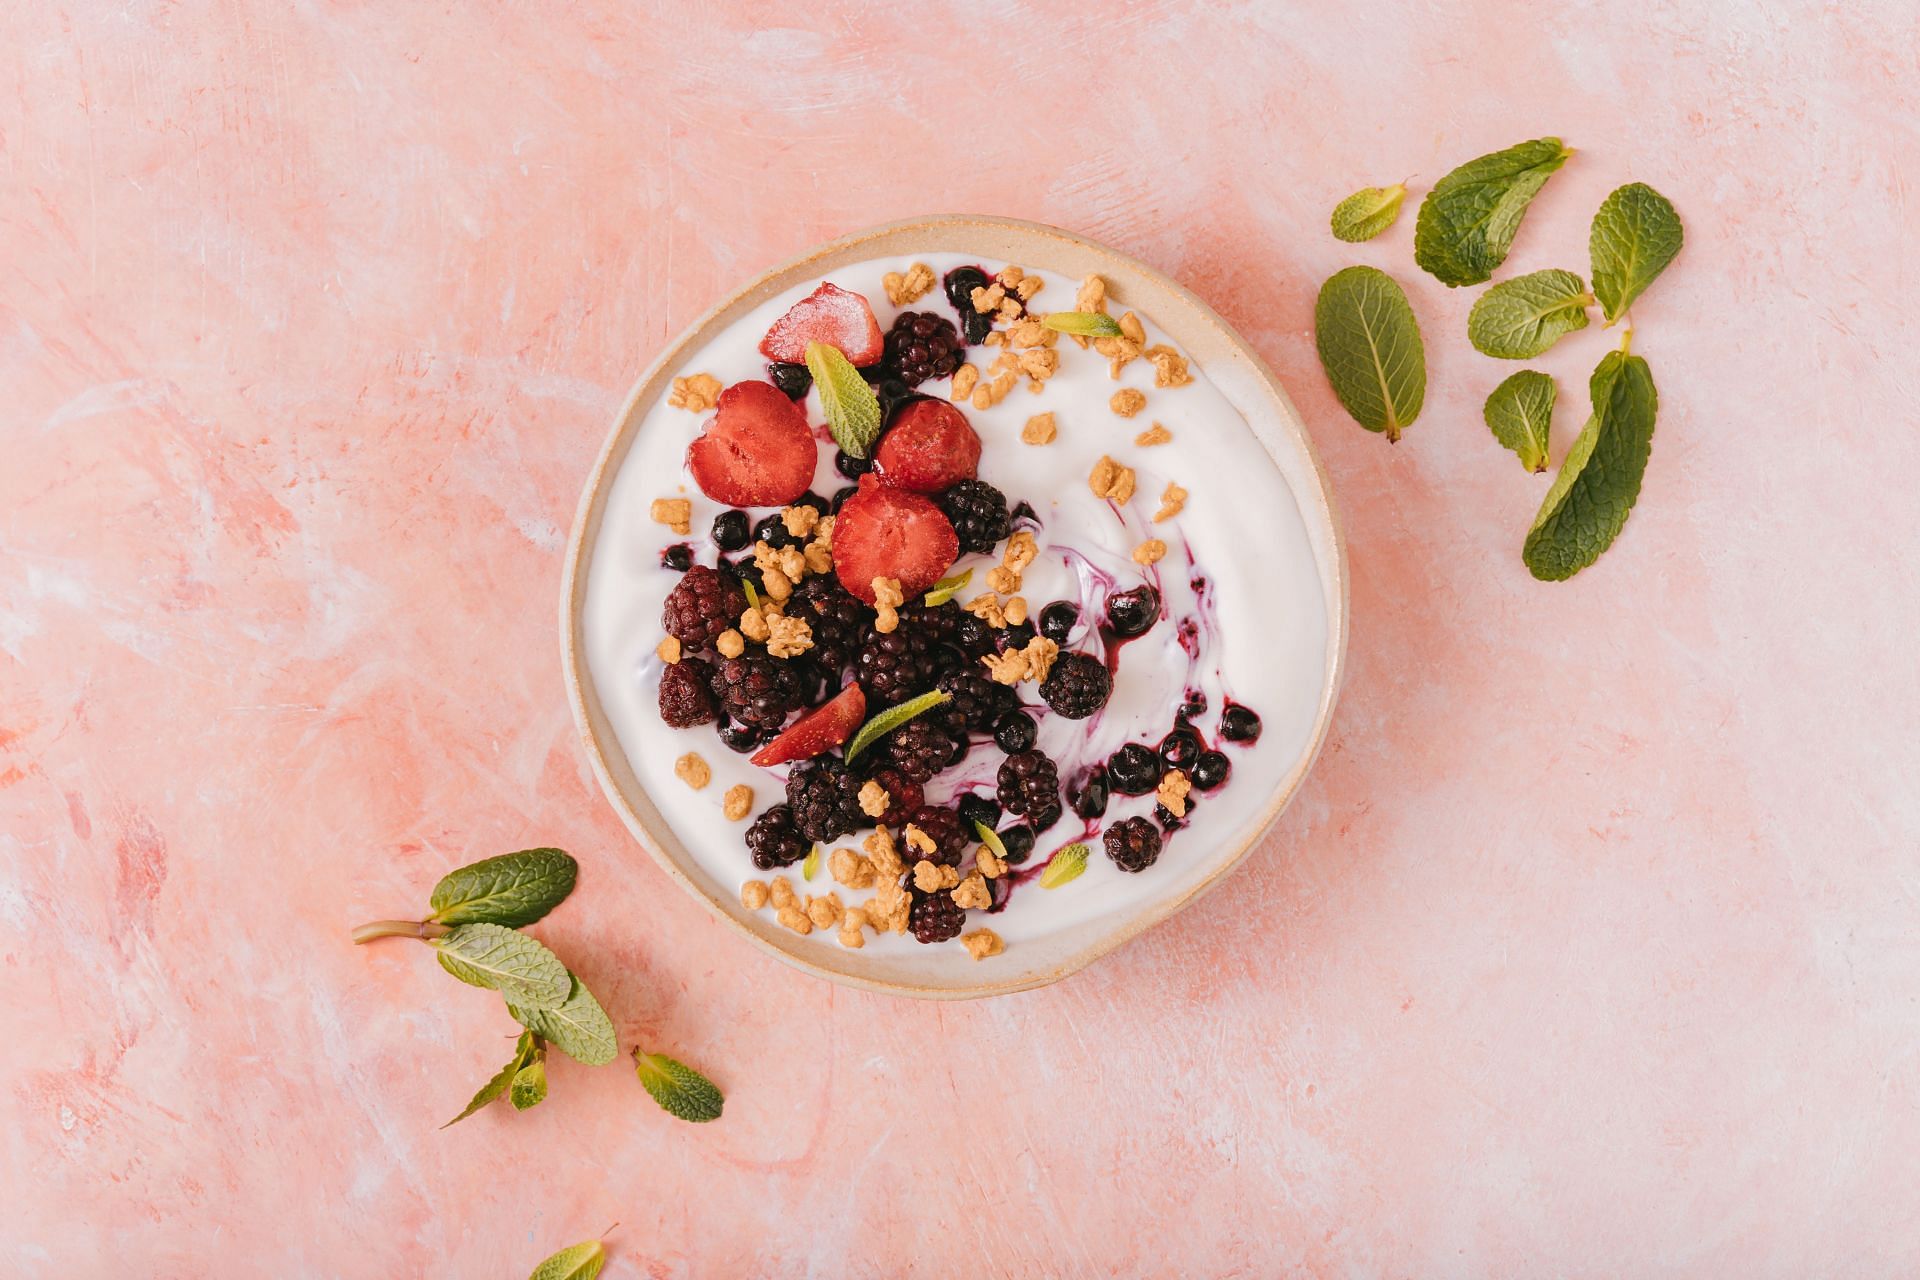 Is yogurt good for diarrhea? (Image via Pexels / Antoni Shkraba)